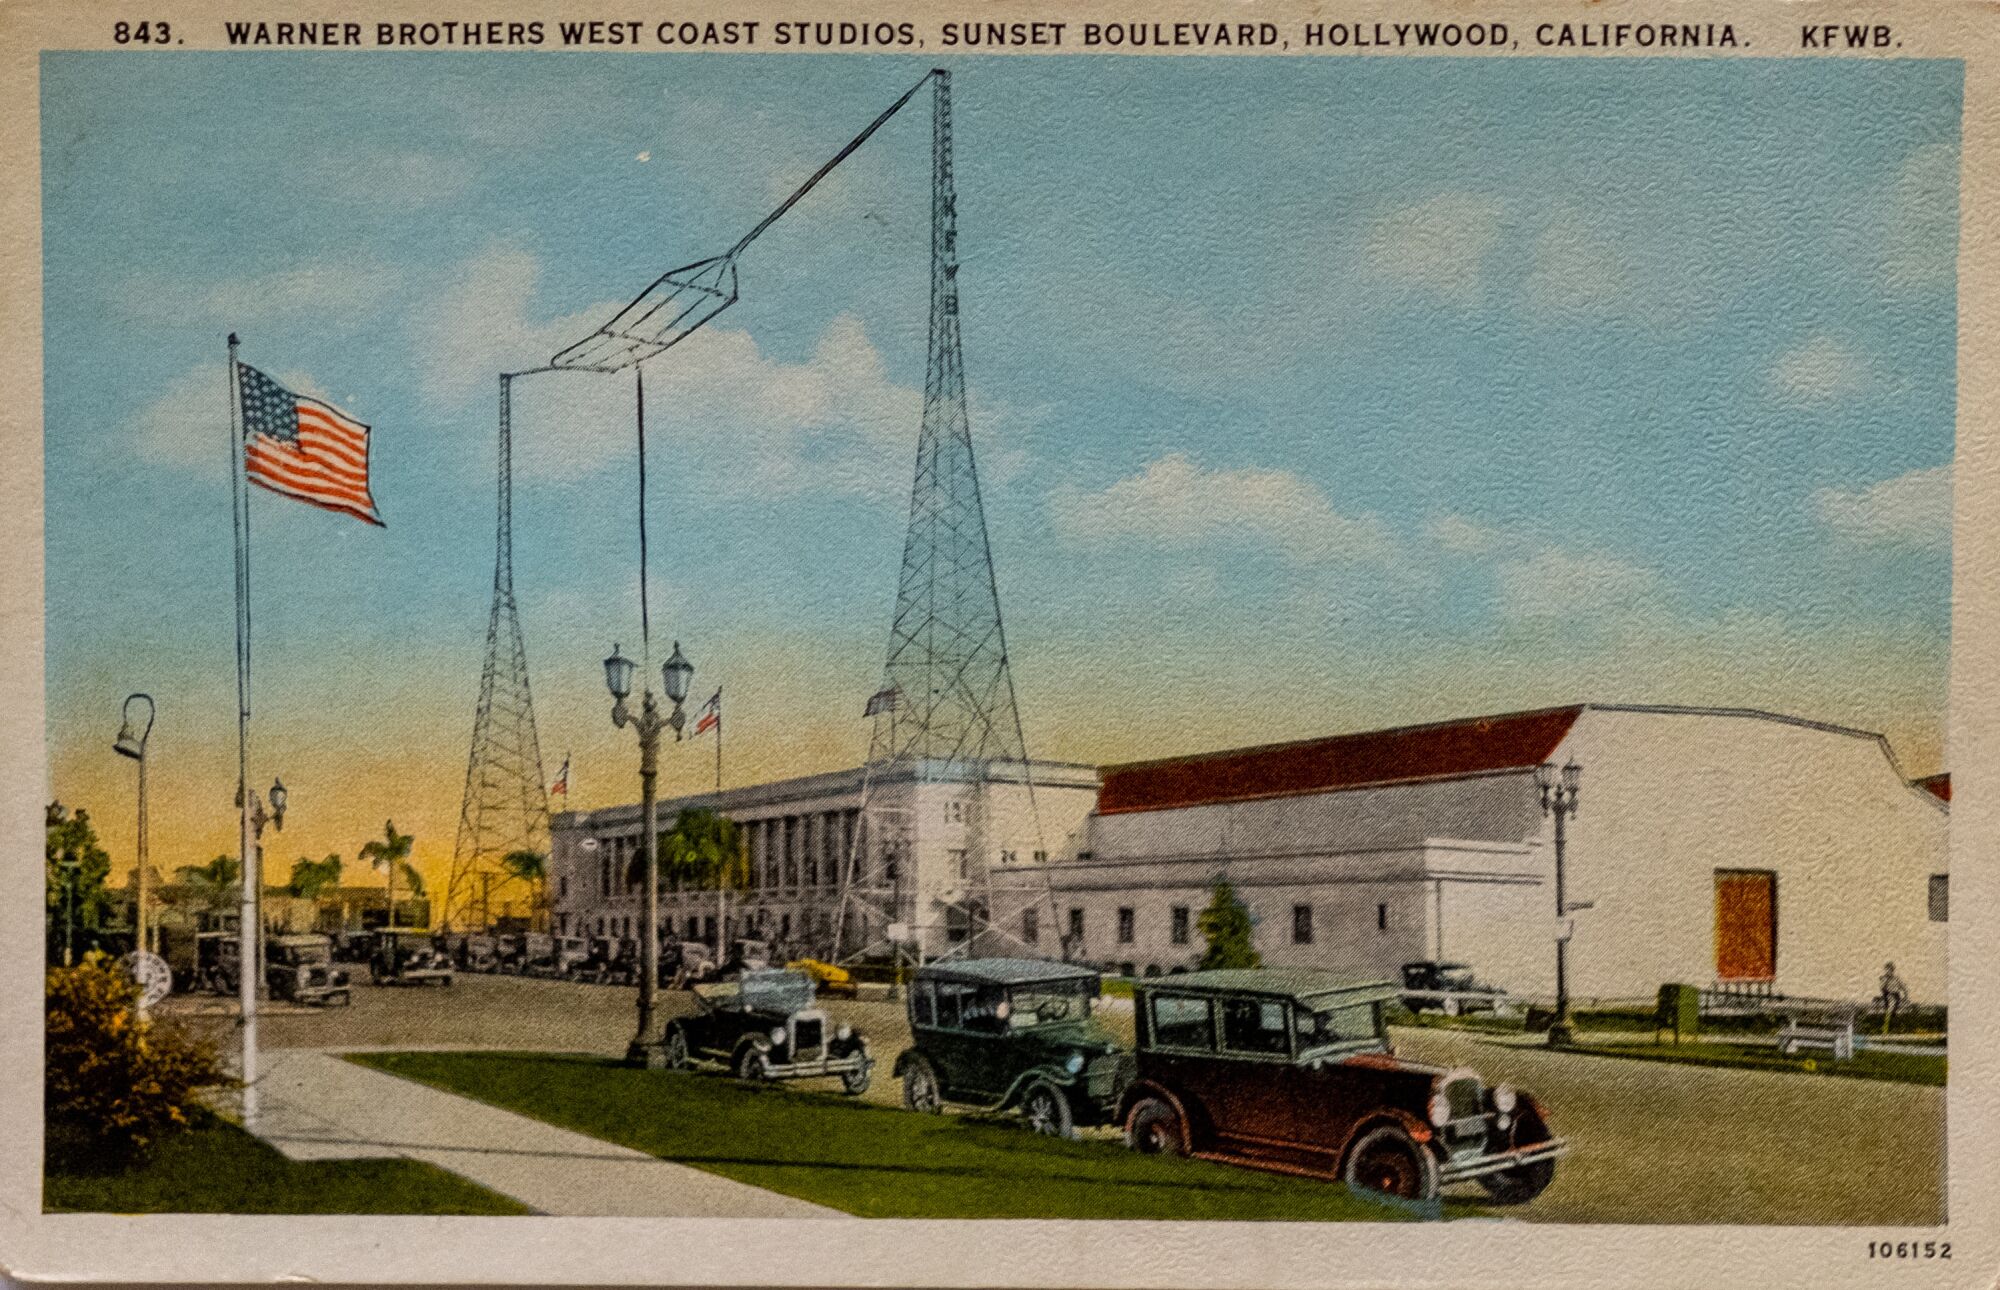 A historical postcard of a movie studio exterior. 